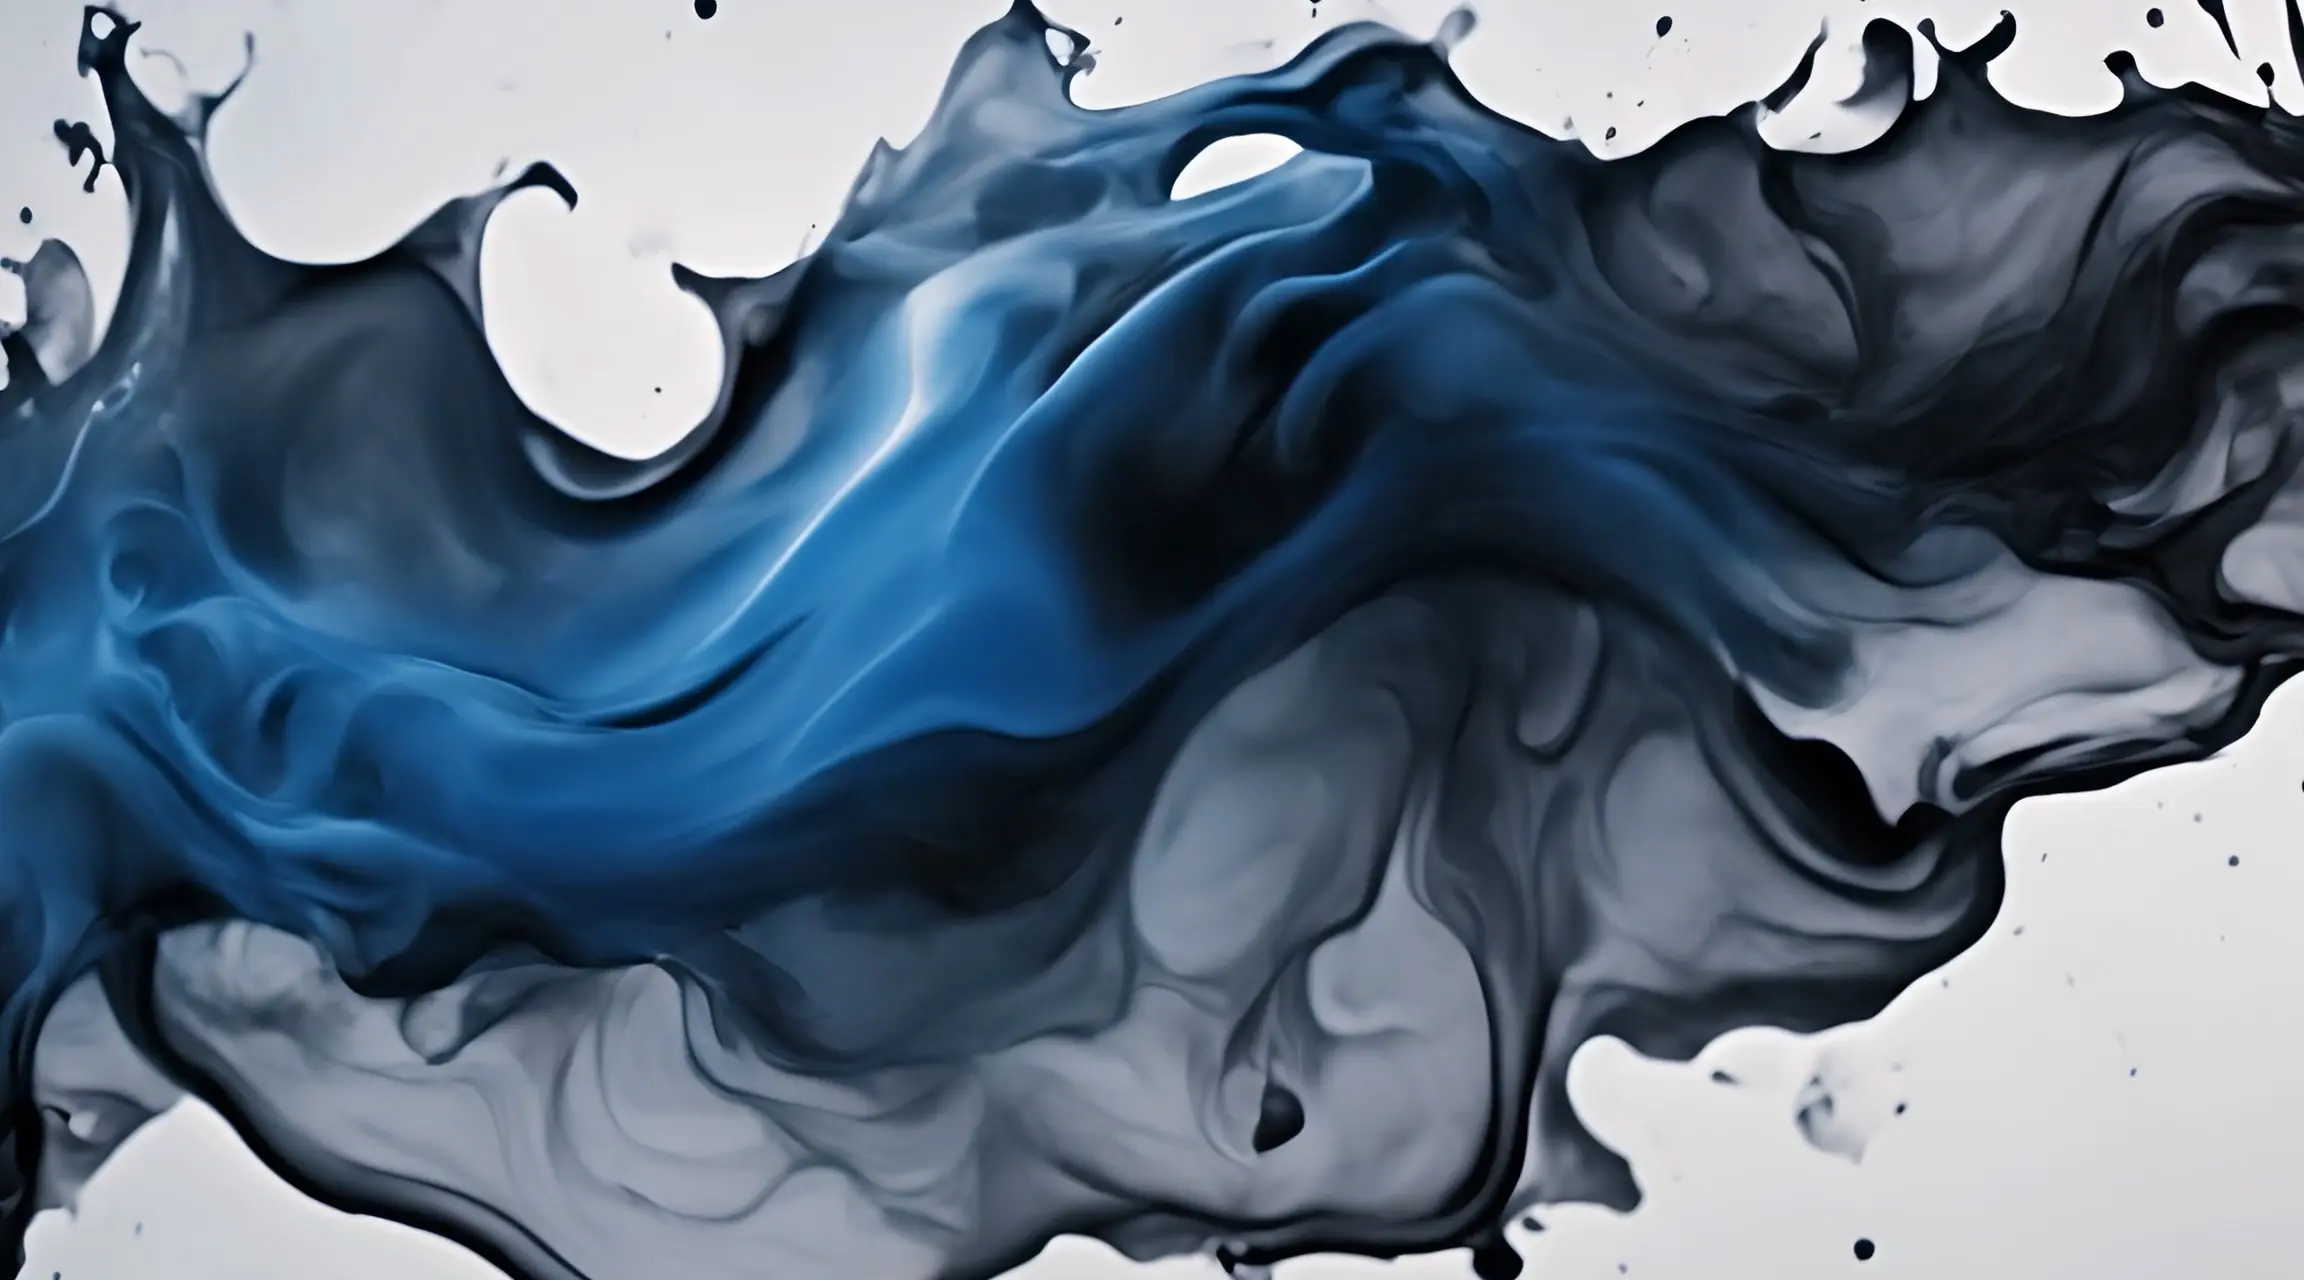 Swirling Blue and Grey Fluids Elegant Video Clip